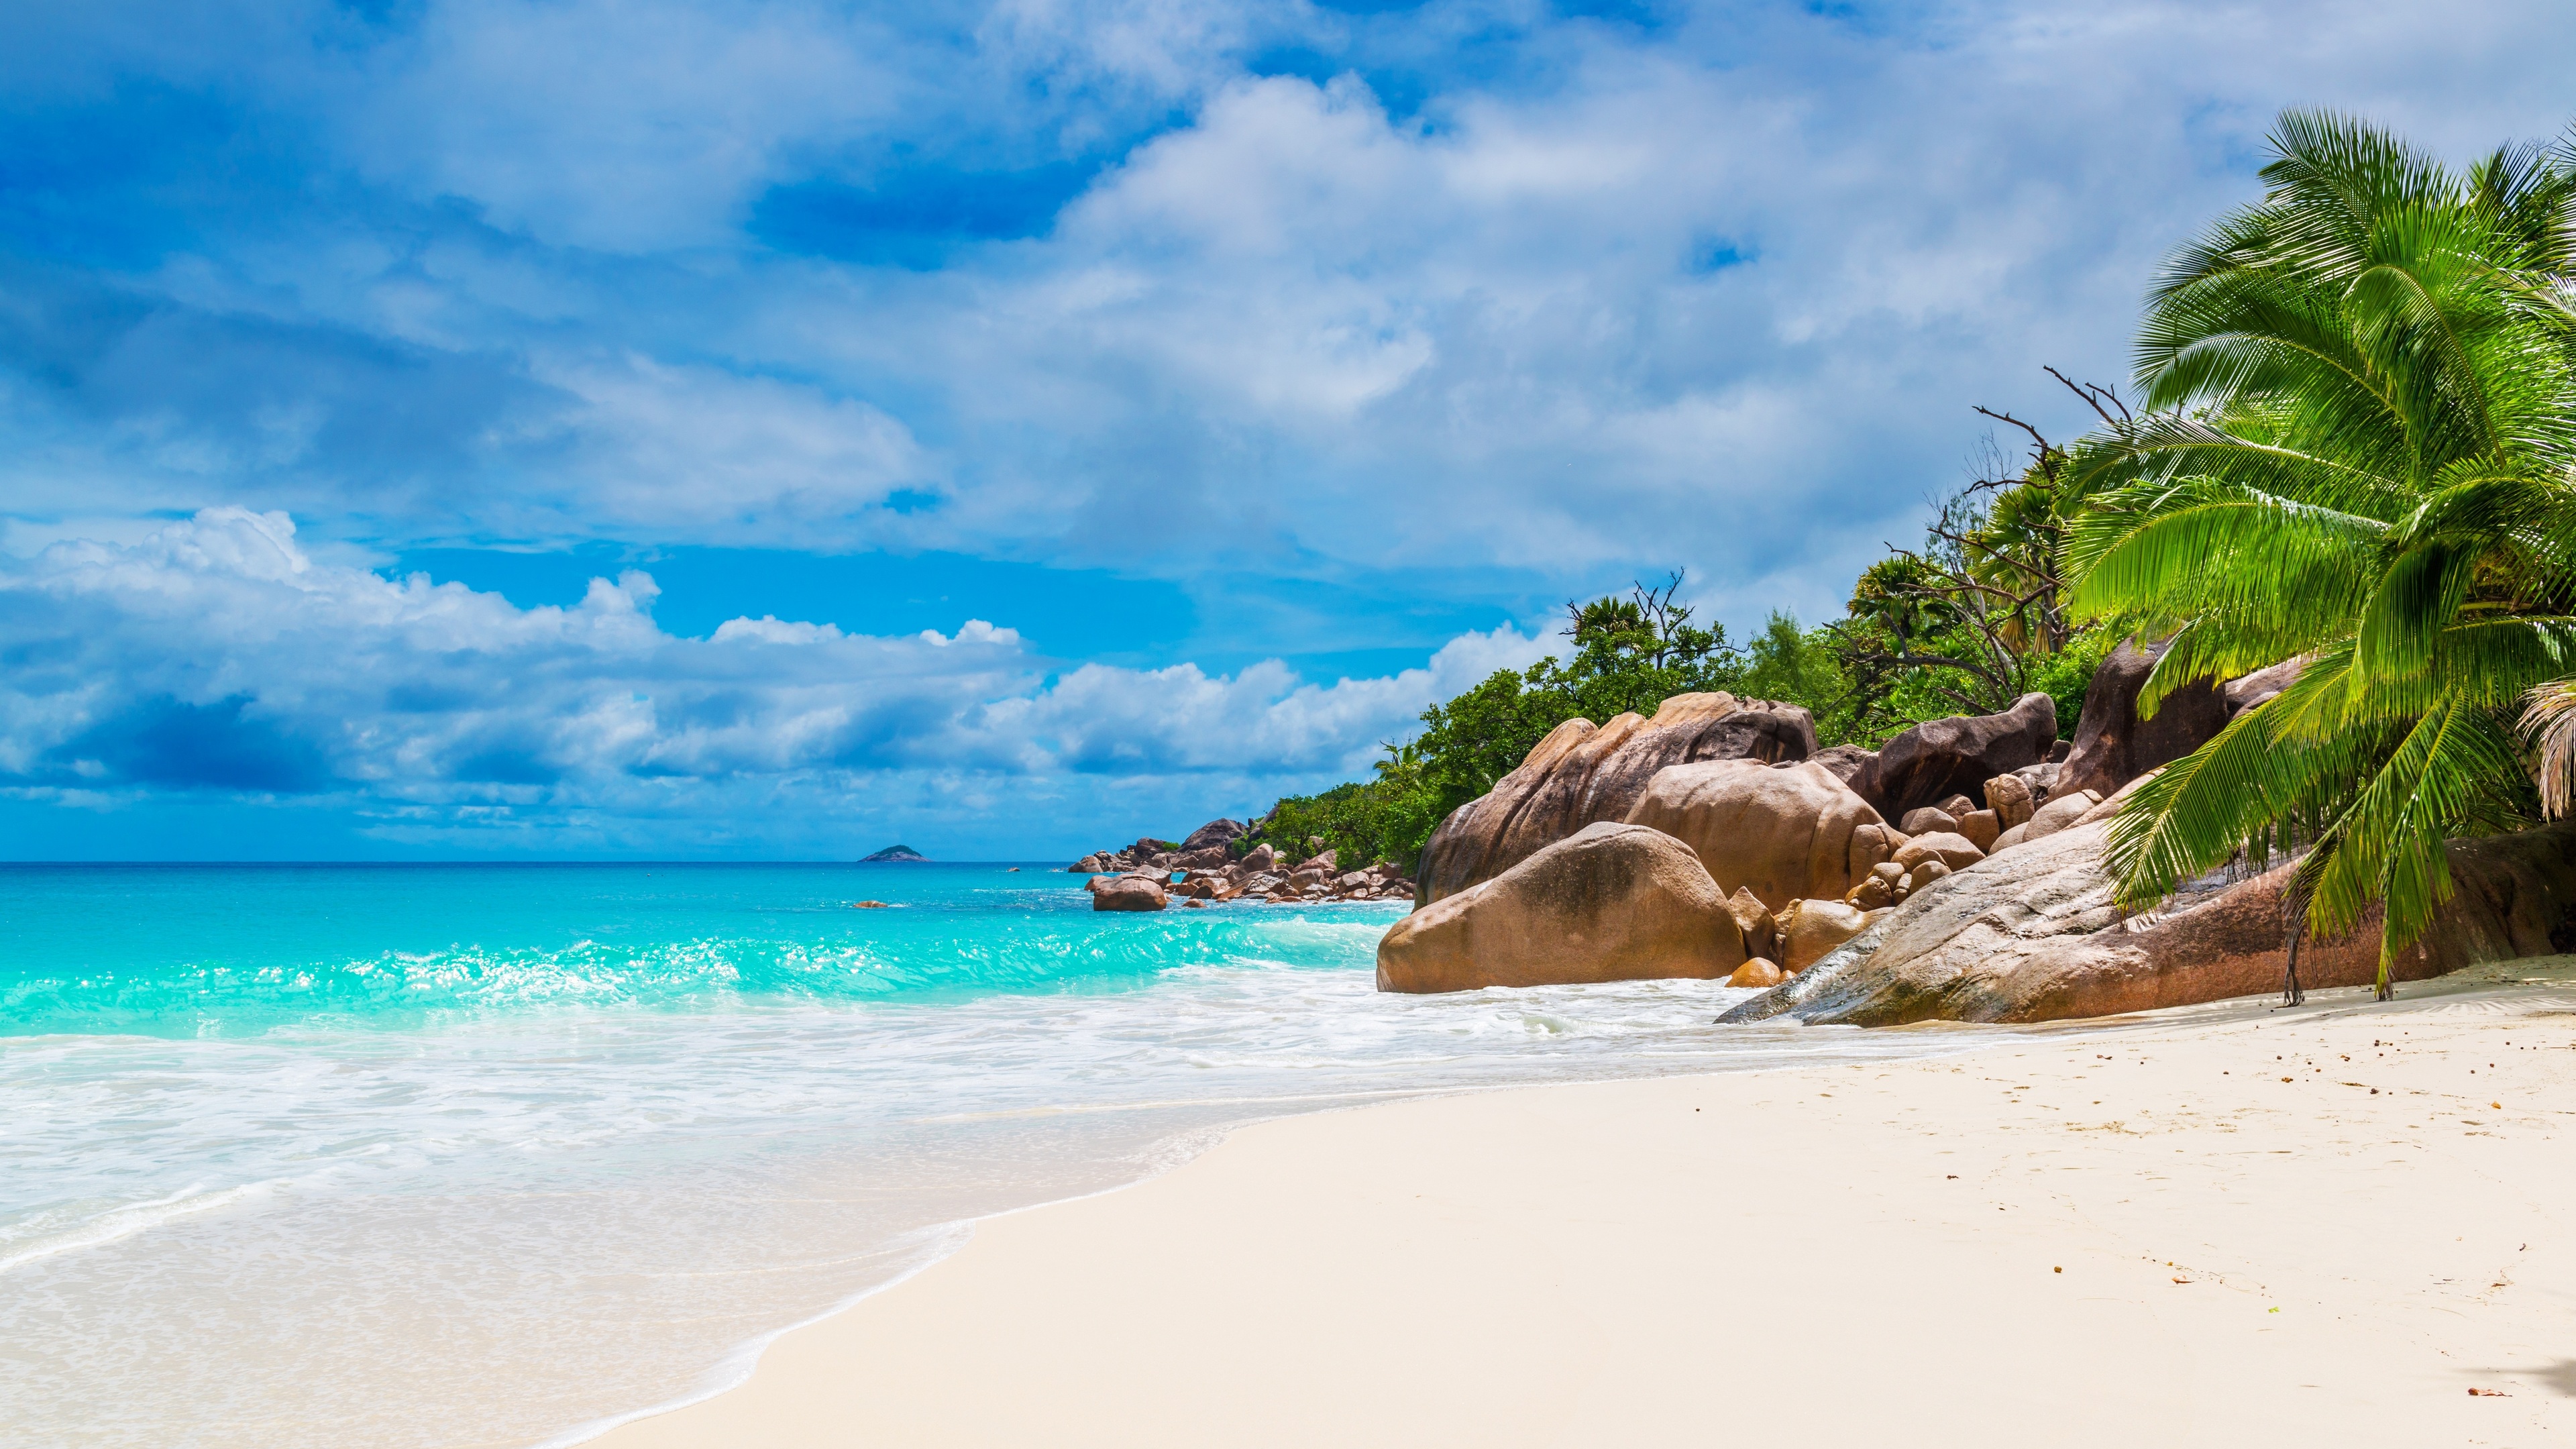 General 3840x2160 nature tropic island Seychelles beach sea rocks palm trees sky clouds sand waves stones